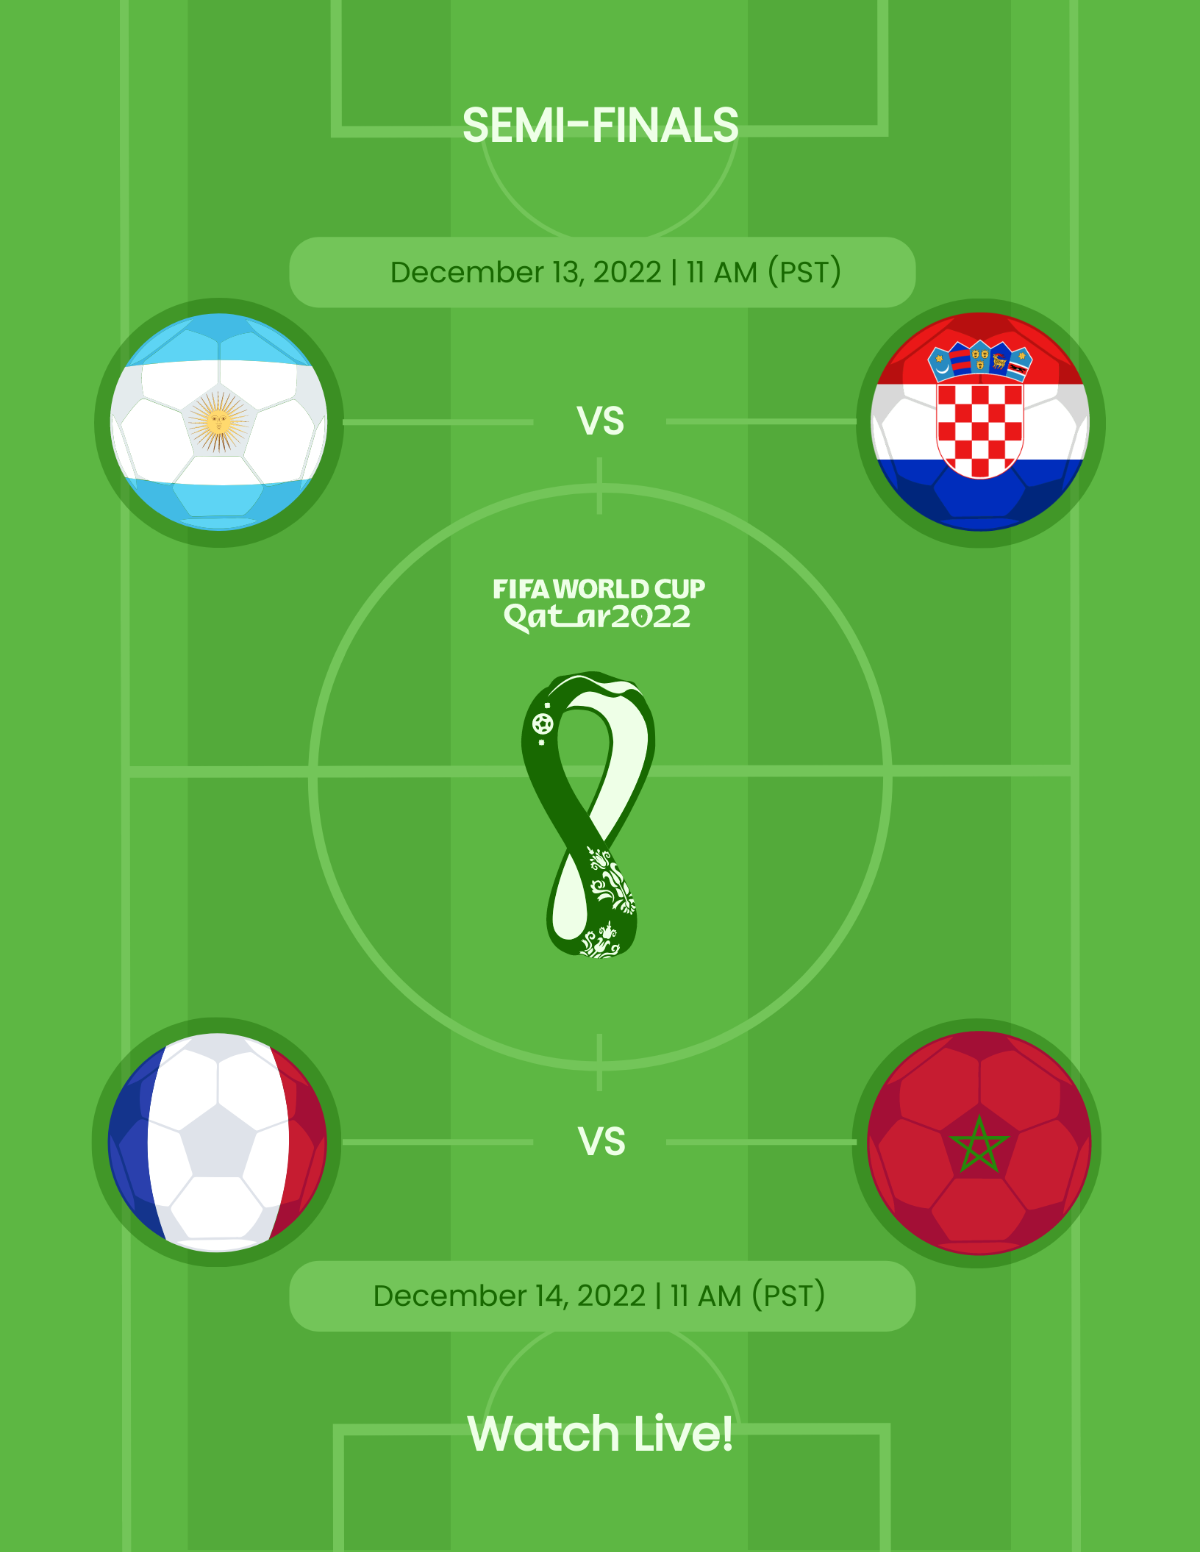 FIFA World Cup 2022 Semi-Finals Flyer Template